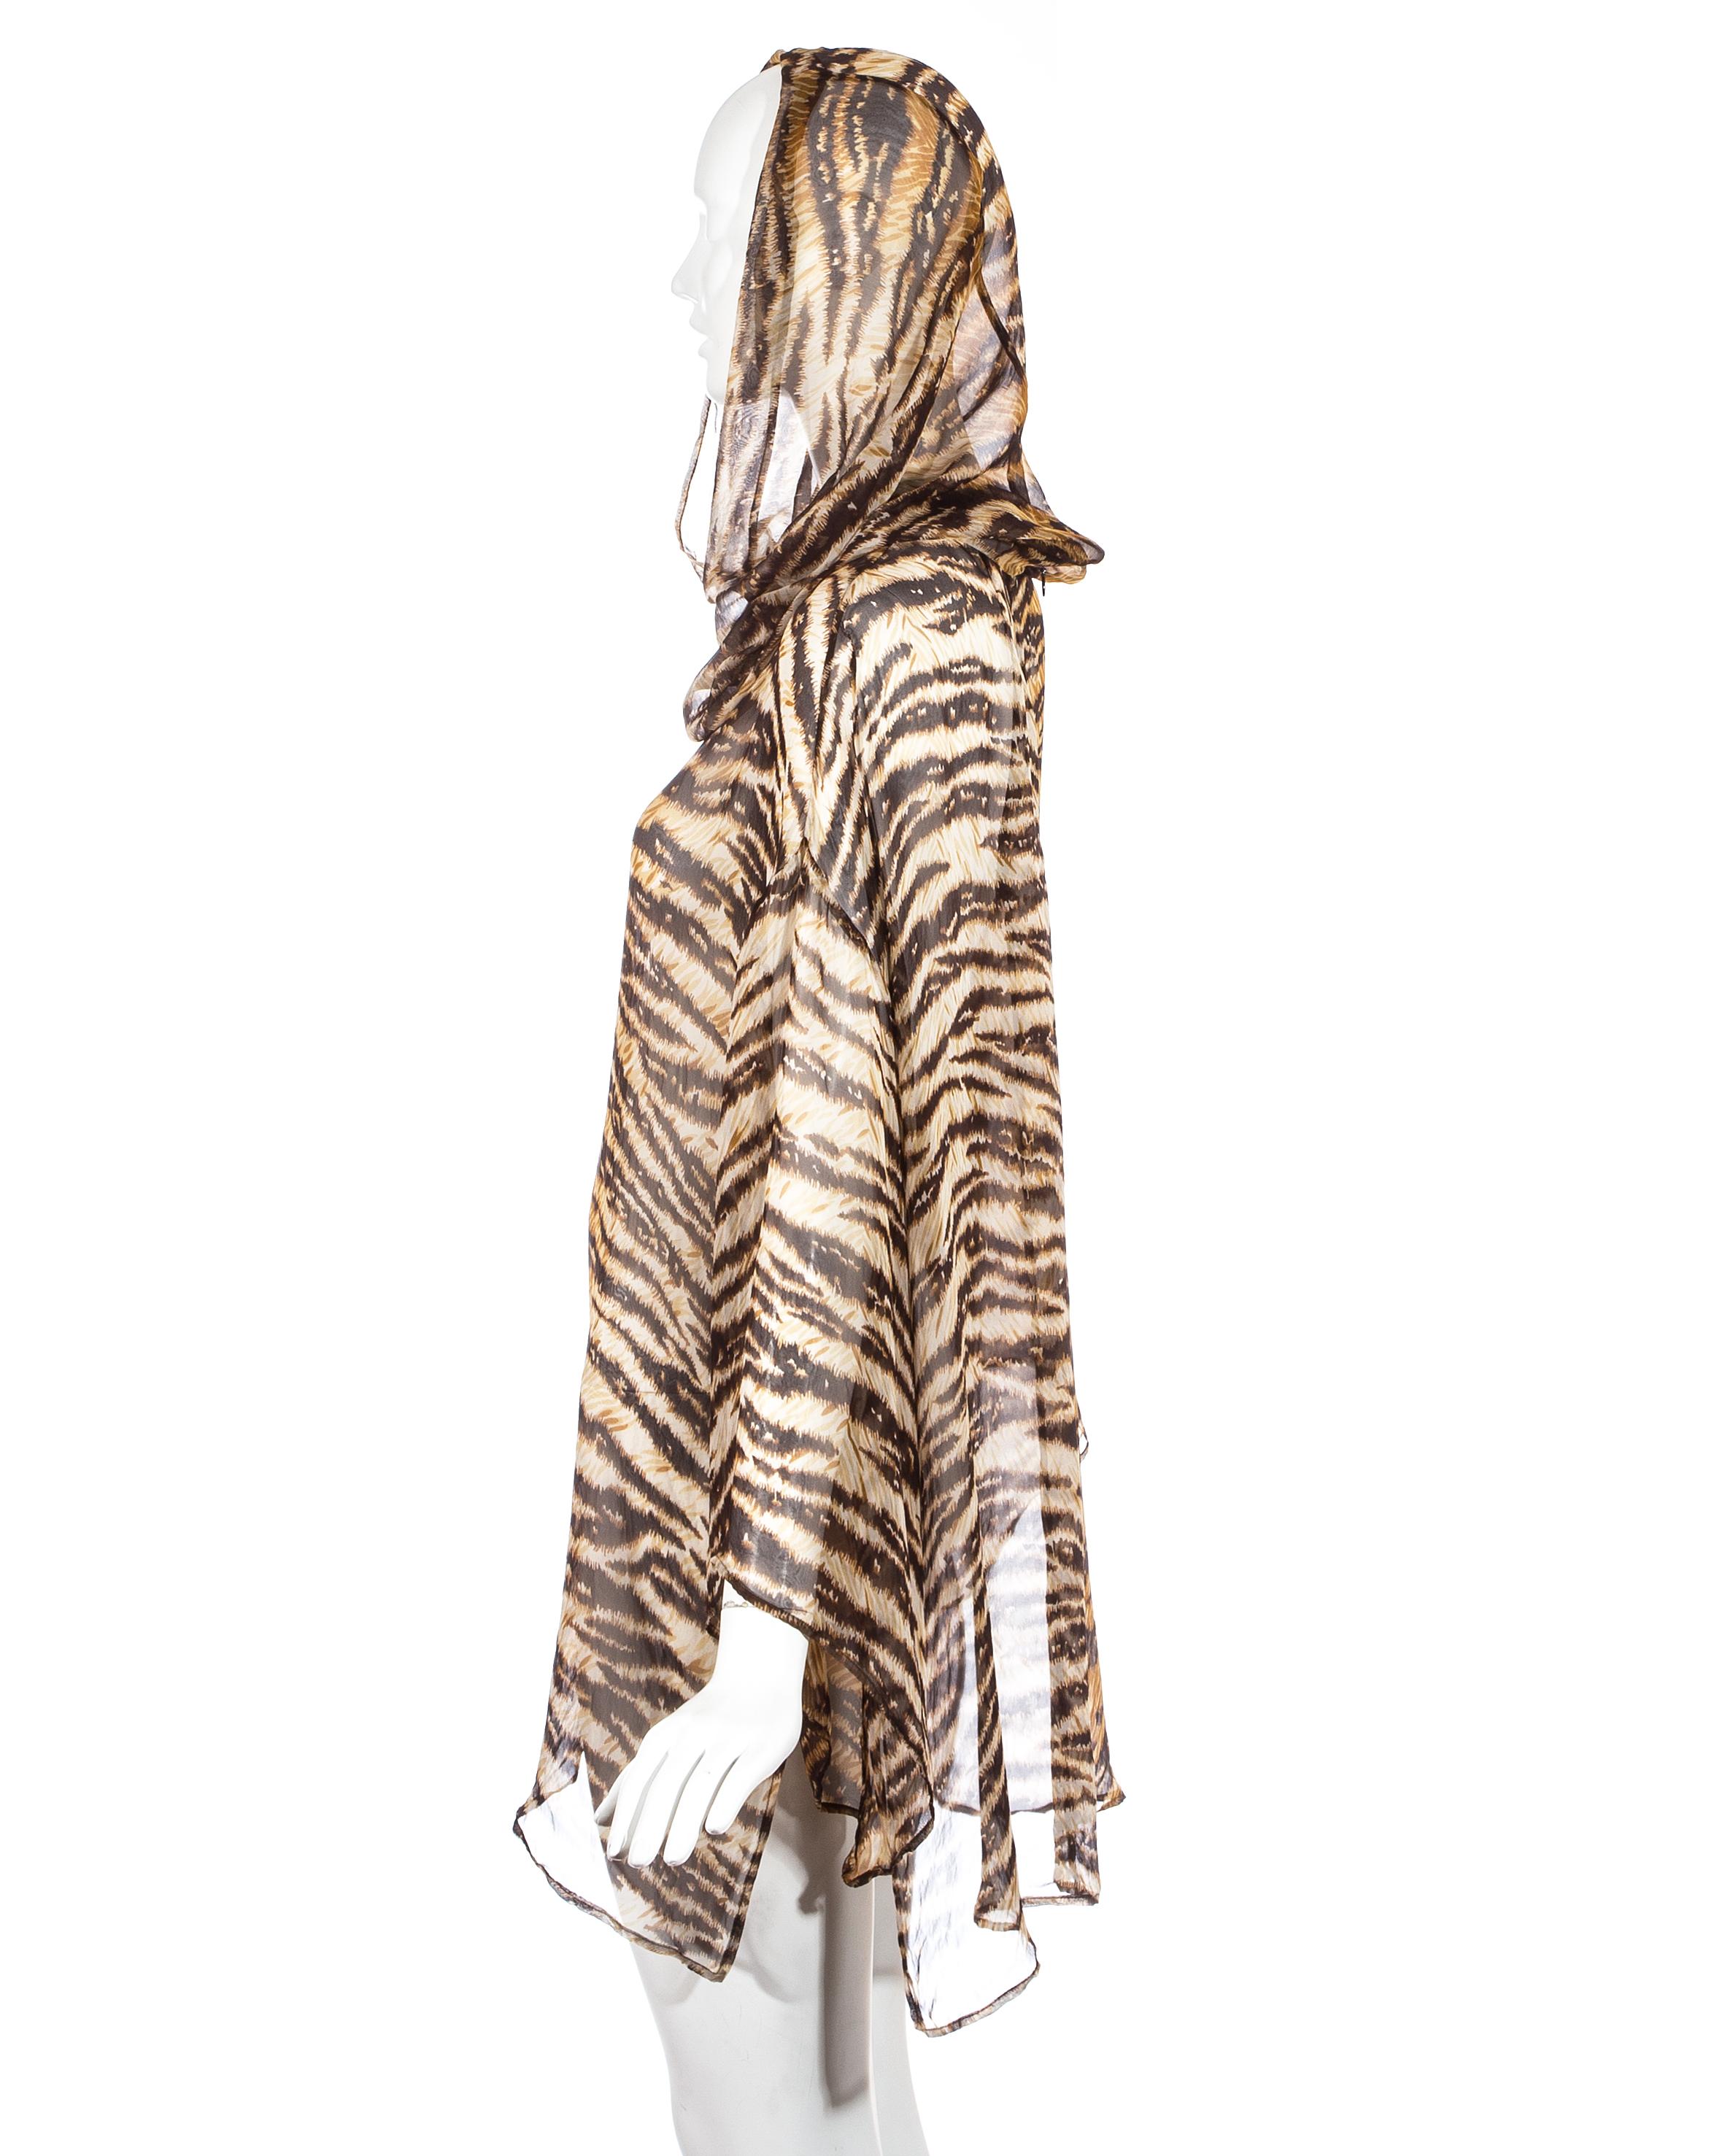 Women's Dolce & Gabbana animal print silk chiffon hooded caftan dress, ss 1996